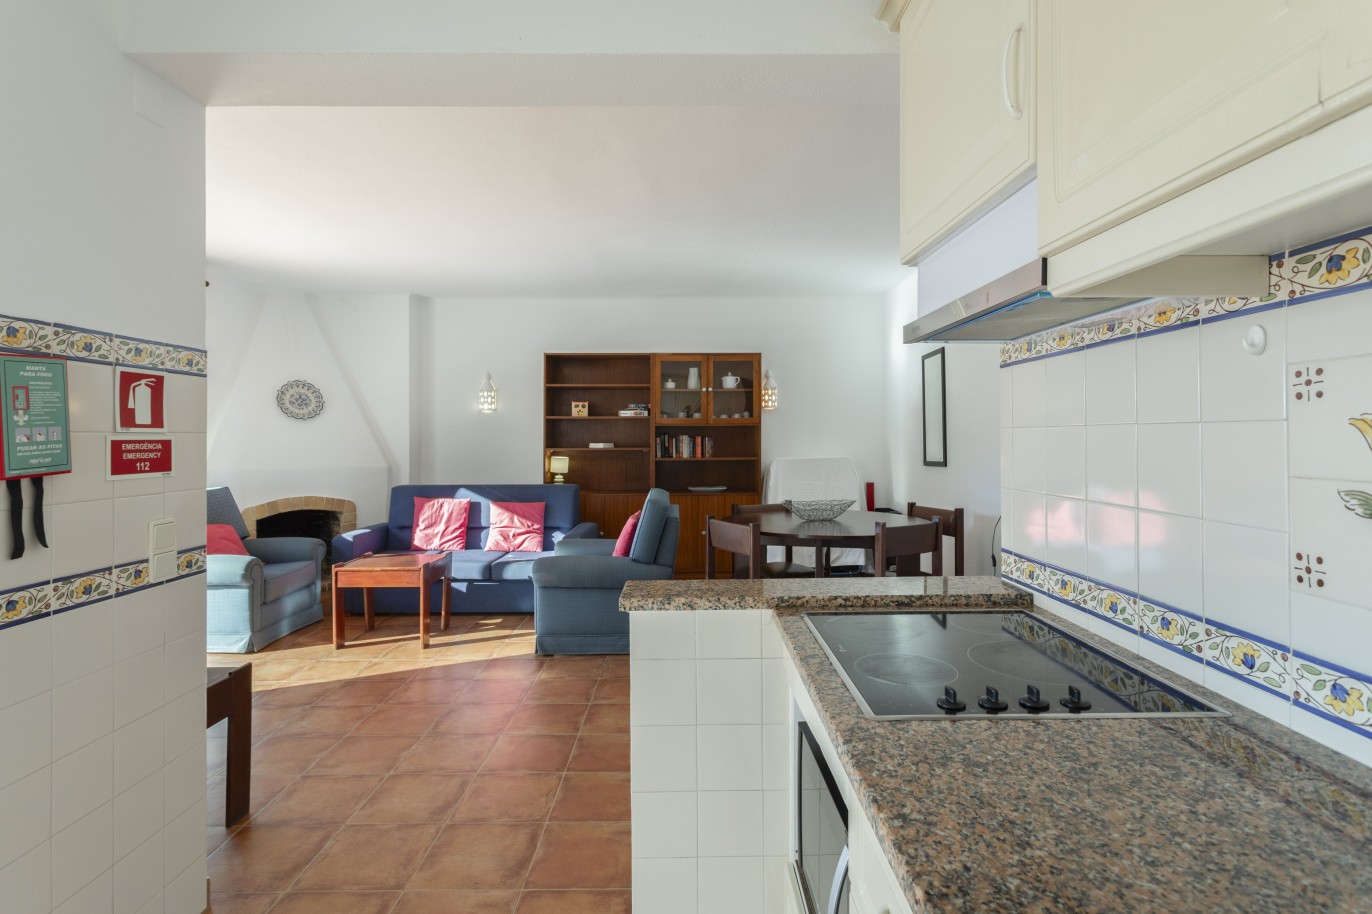 2-bedroom Apartment Duplex, sea view, for sale in Porches, Algarve_247754